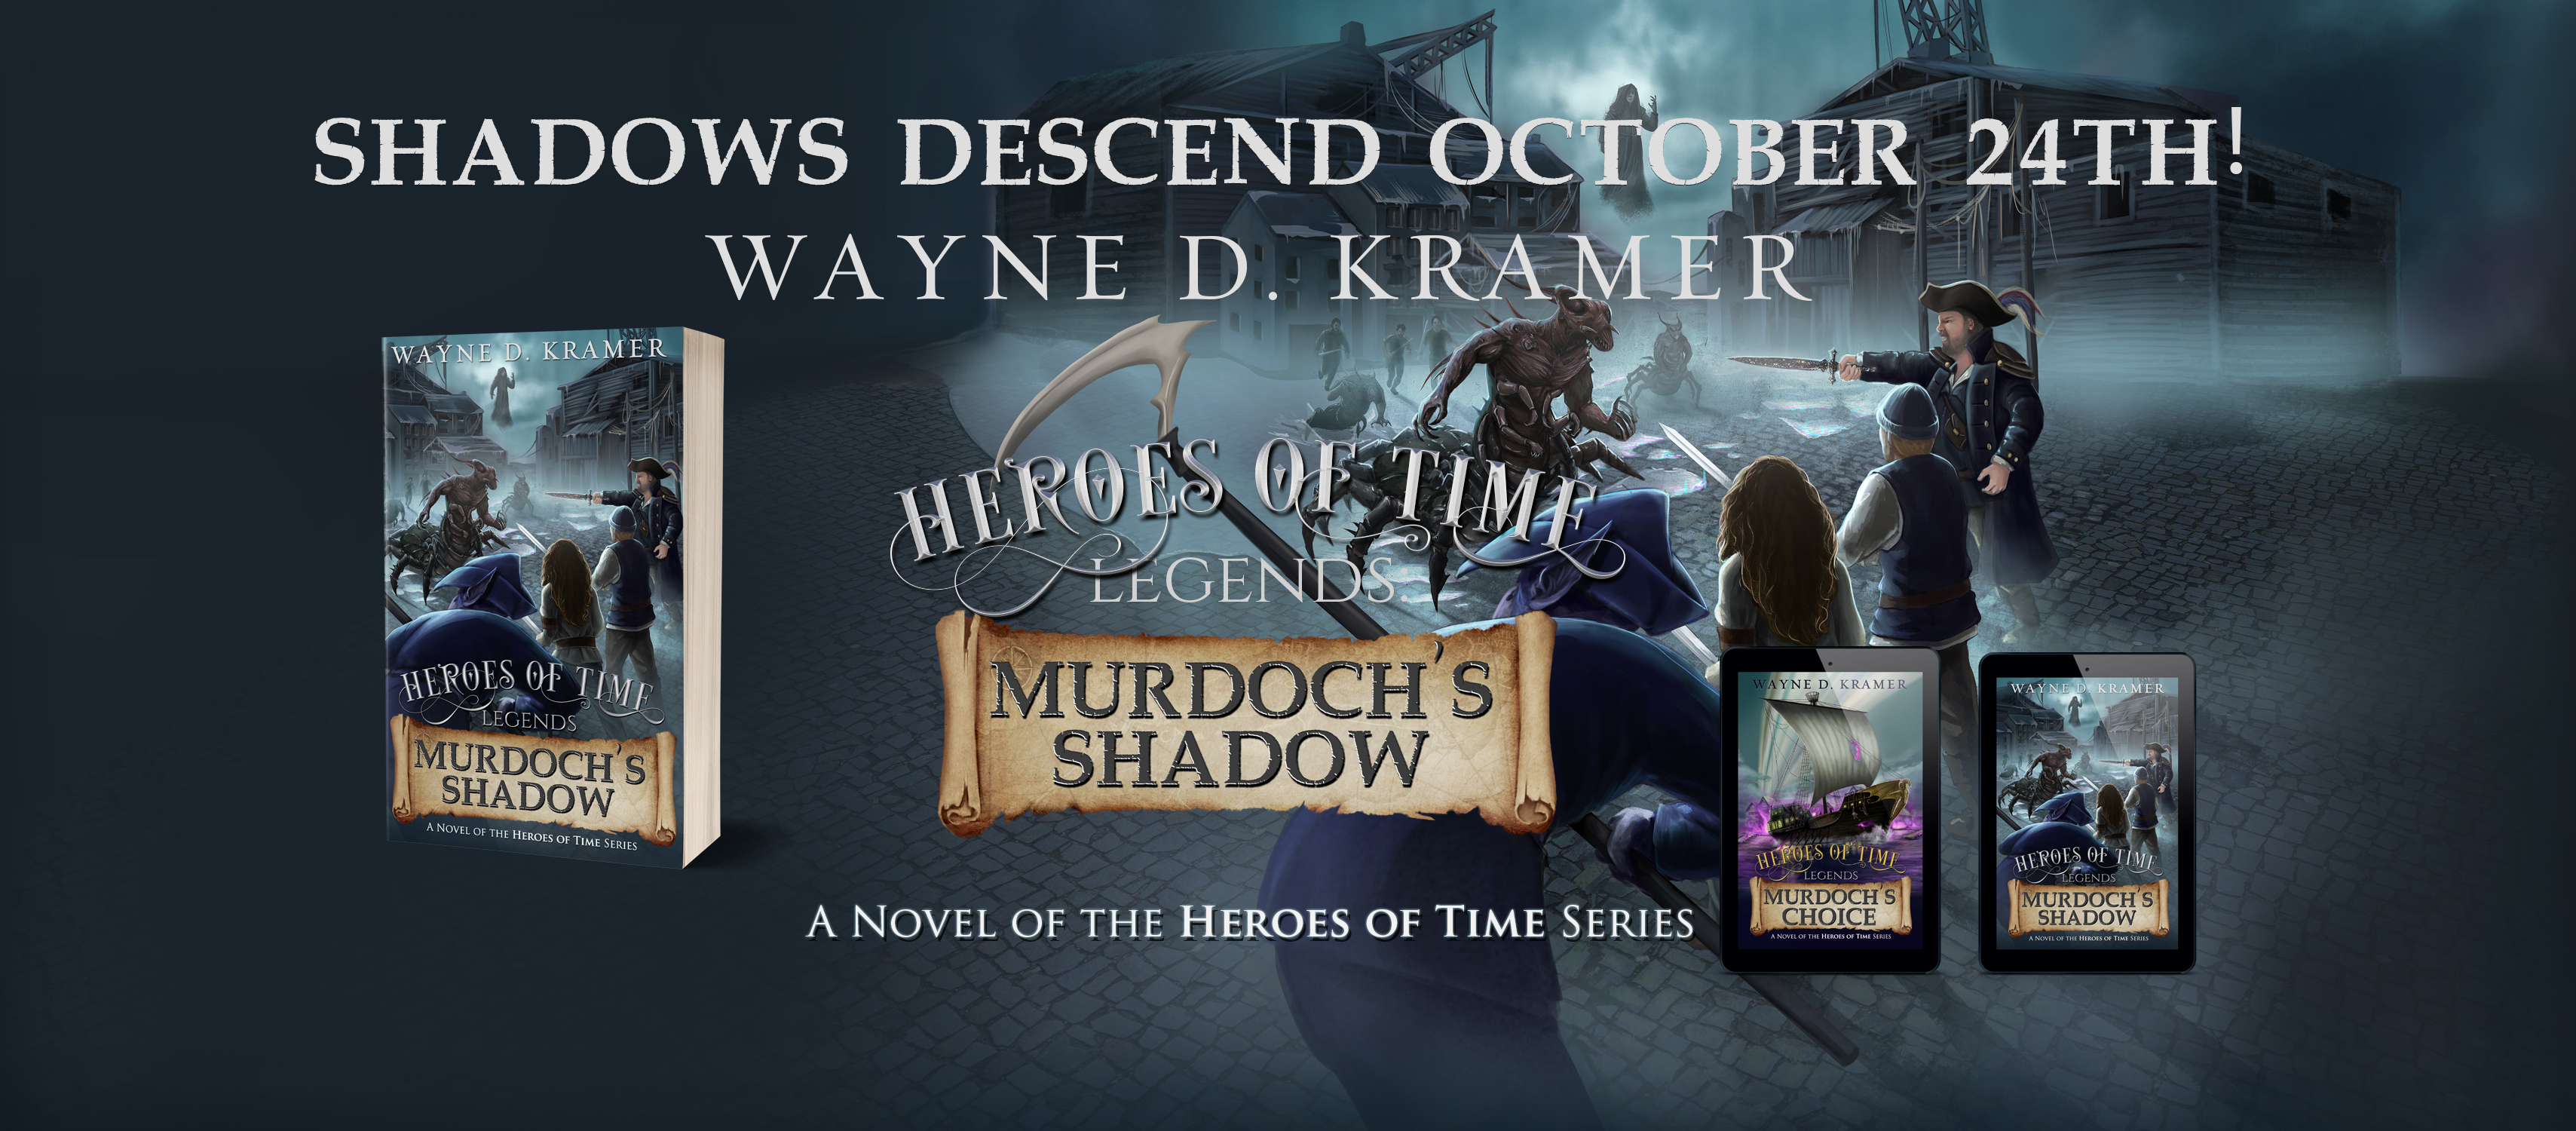 Heroes of Time Legends: Murdoch's Shadow - Shadows Descend October 24, 2022